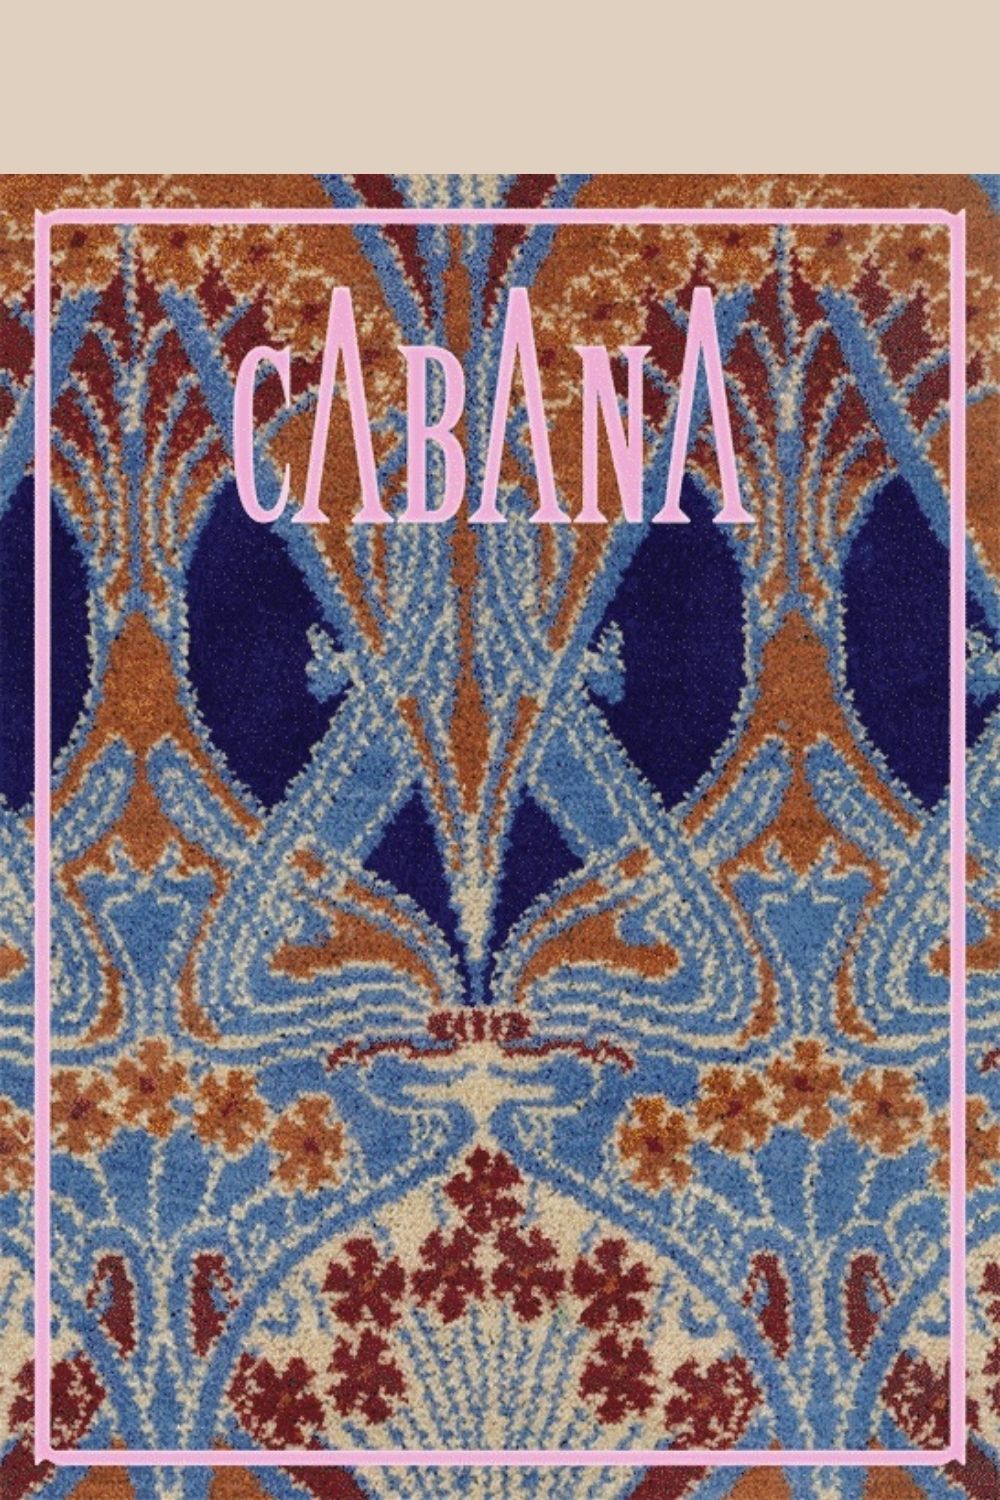 Cabana Magazine N17